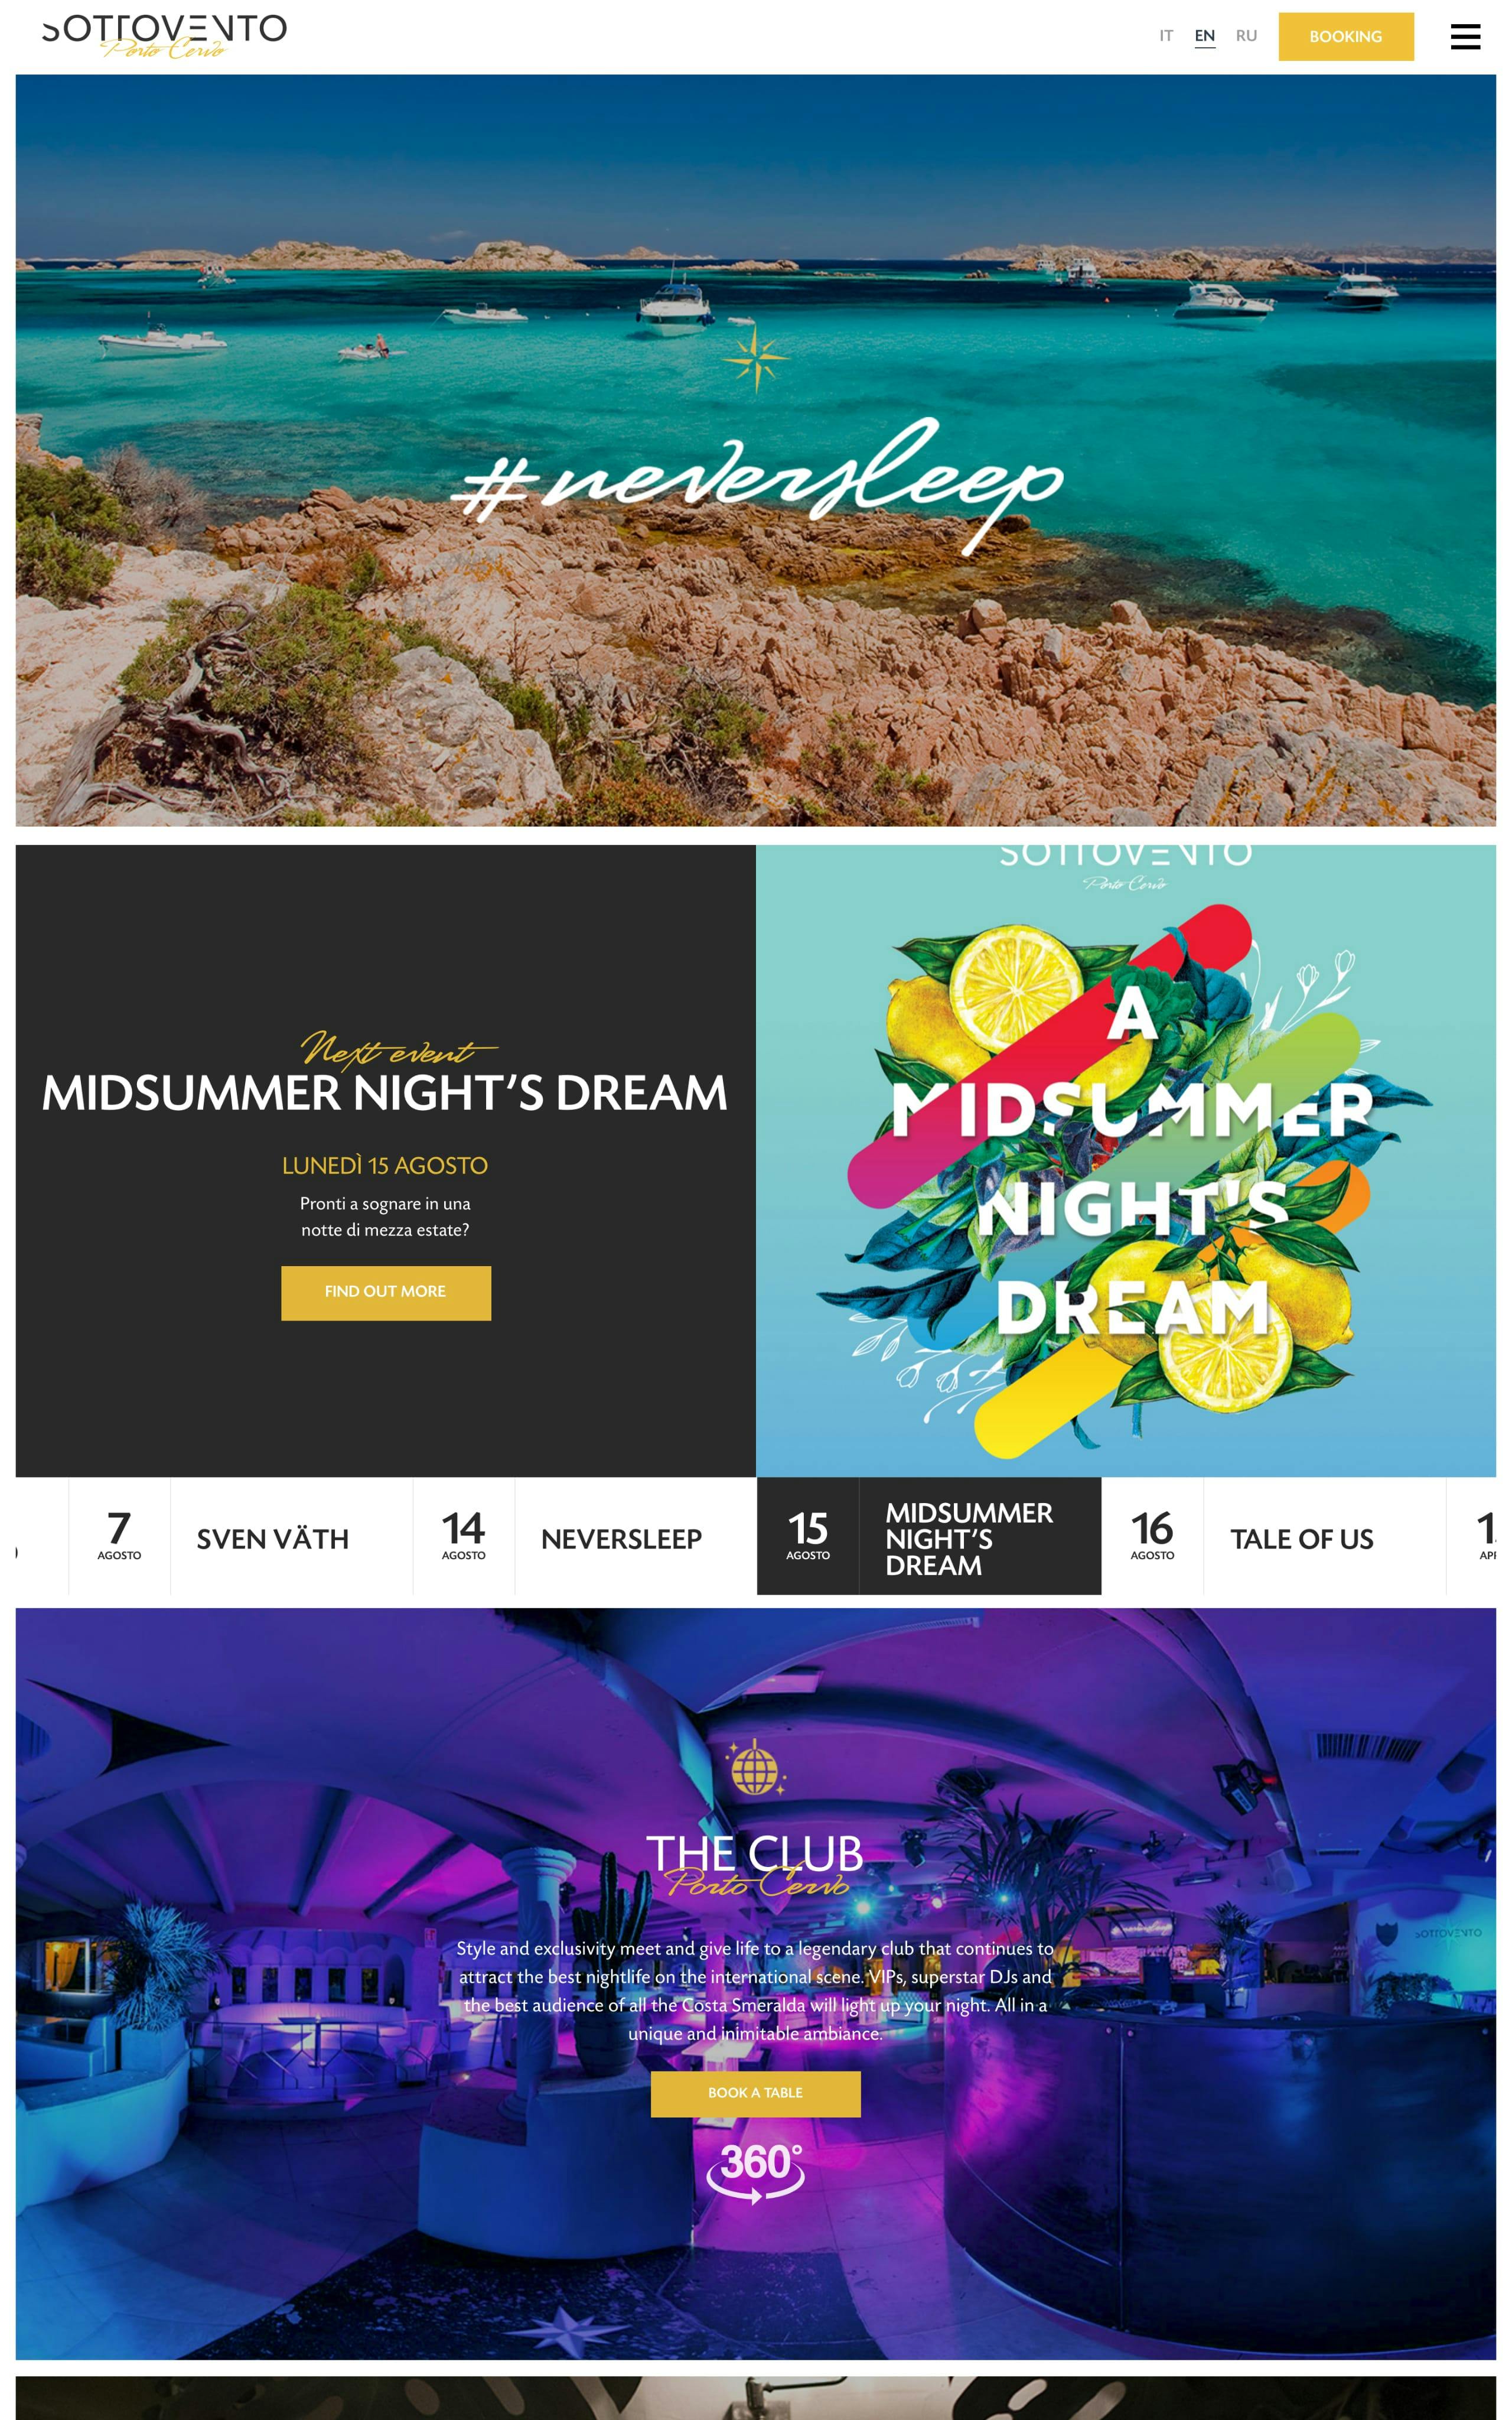 Sottovento Club Website Screenshot